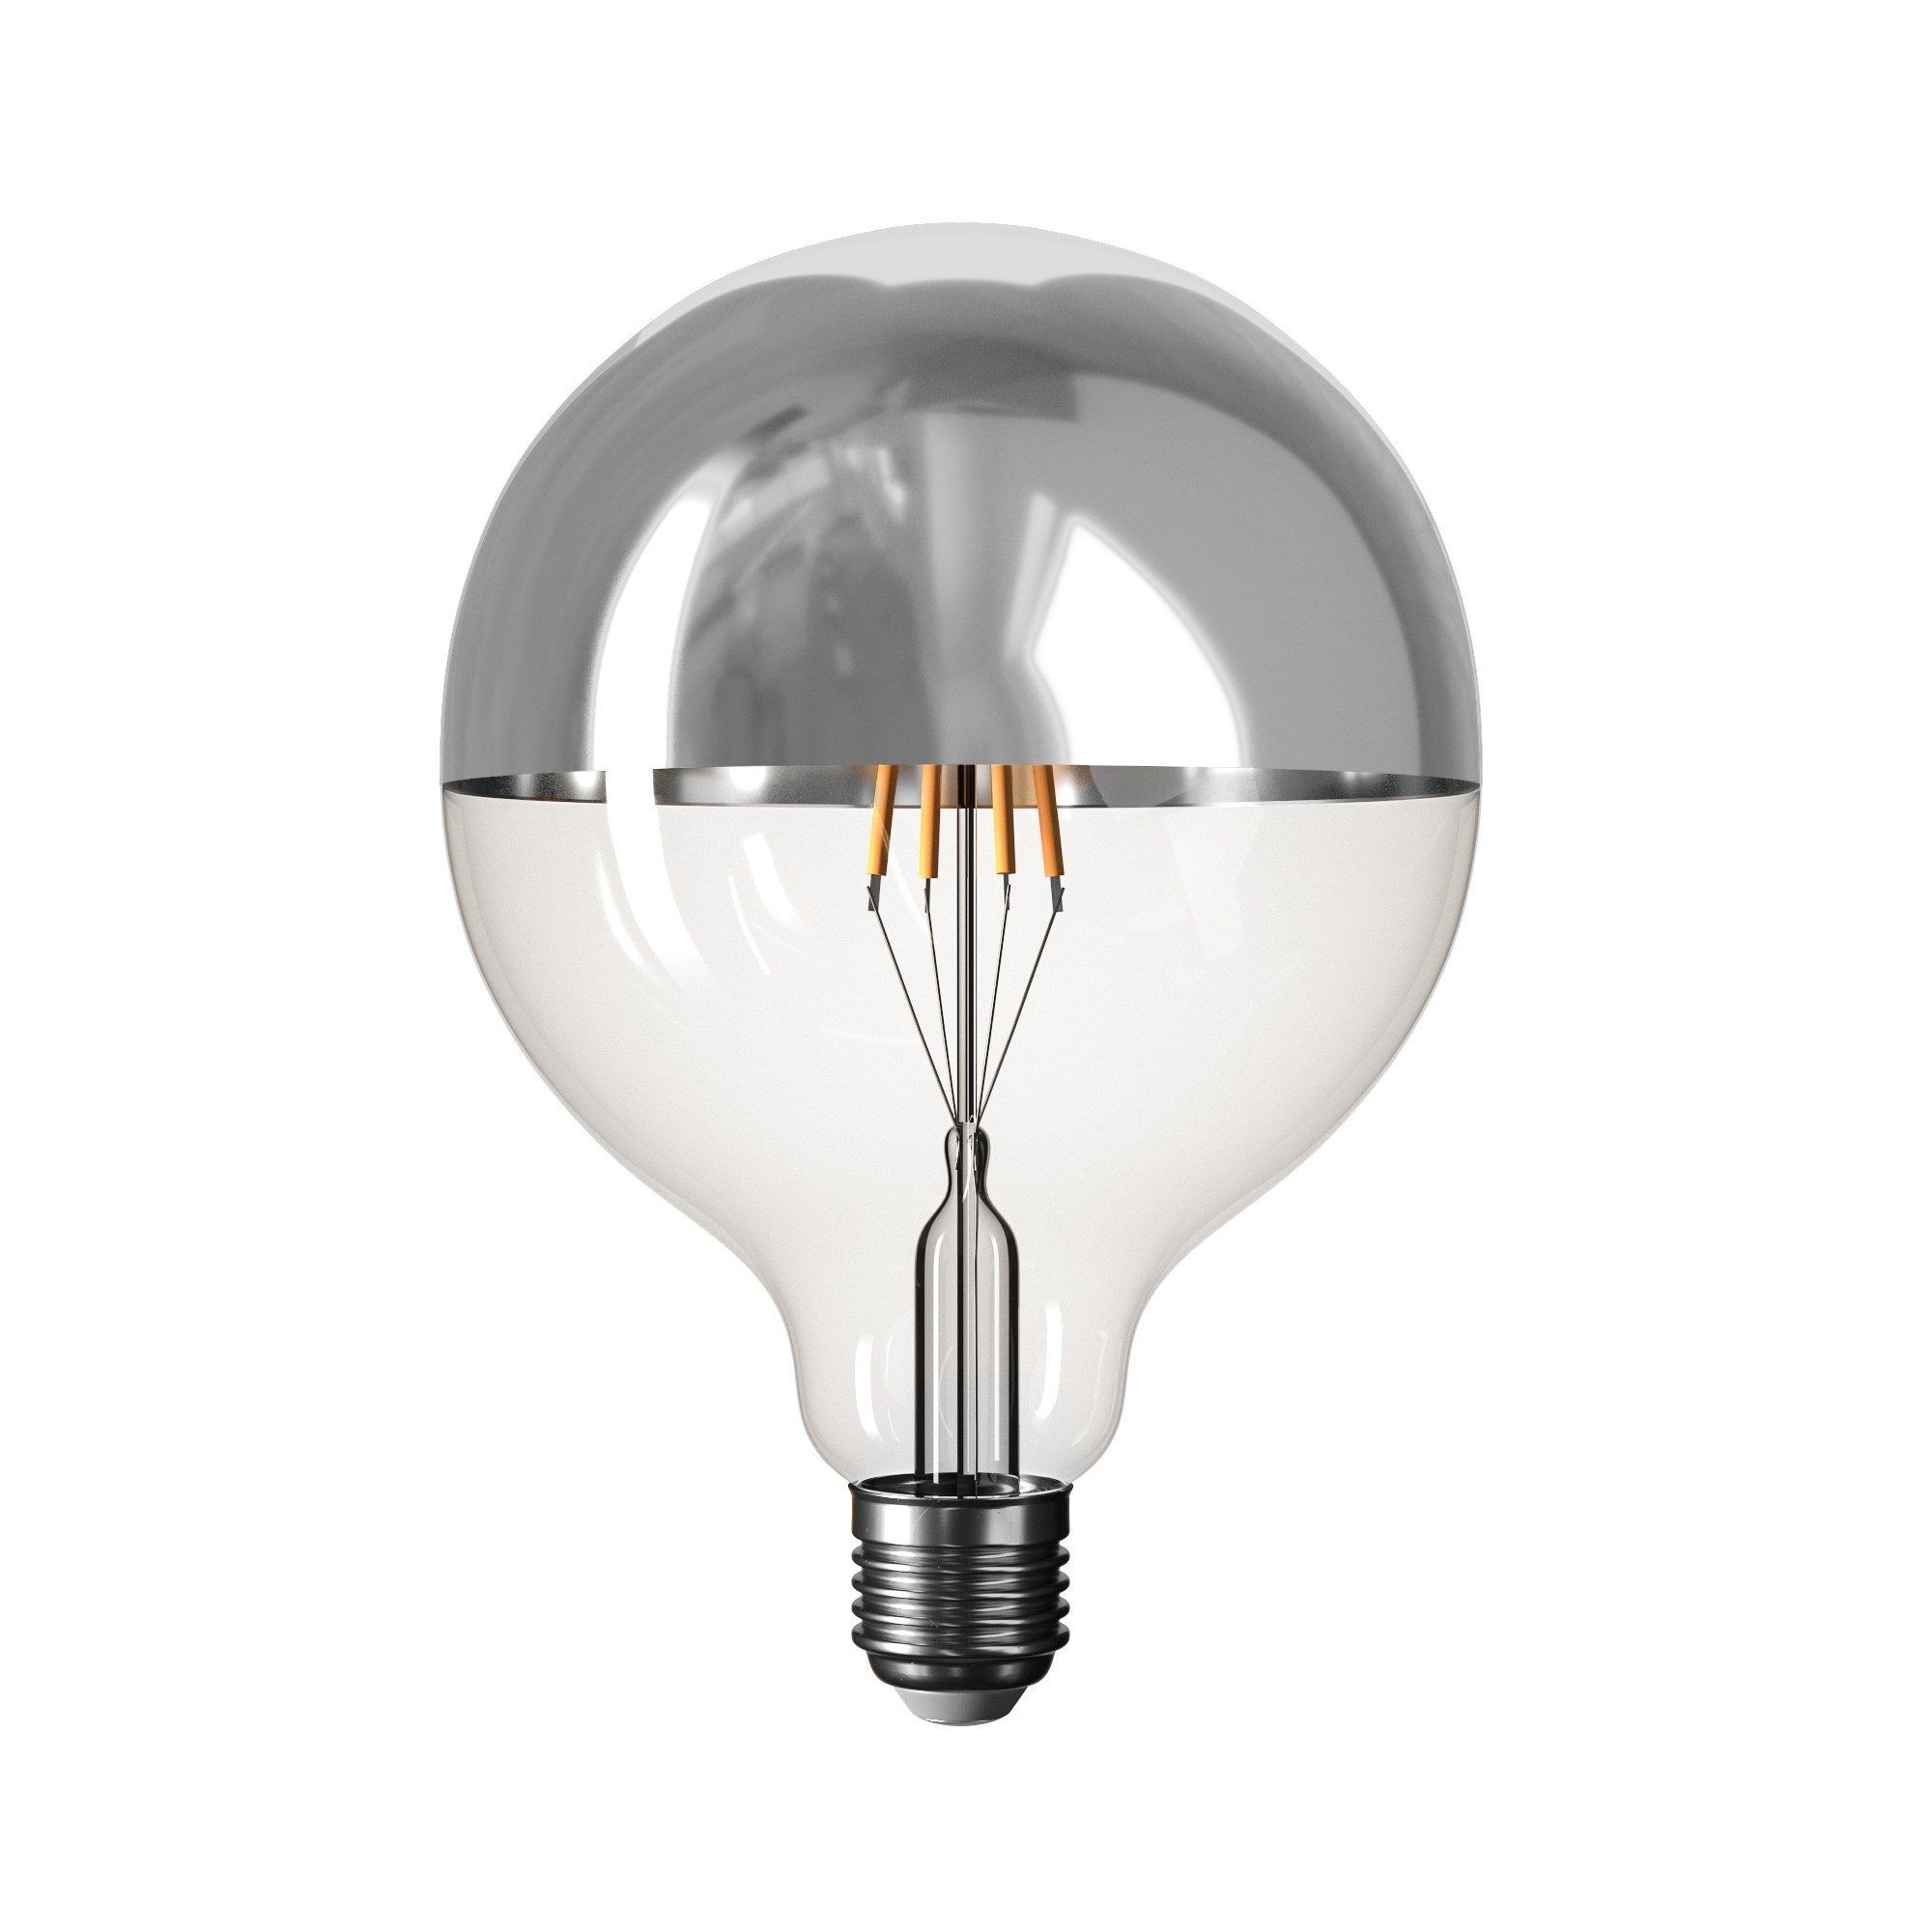 B05 - LED Light Bulb 5V G125 G125, E27, 1,3W, 2500K, 110Lm, clear glass with Half-Sphere silver